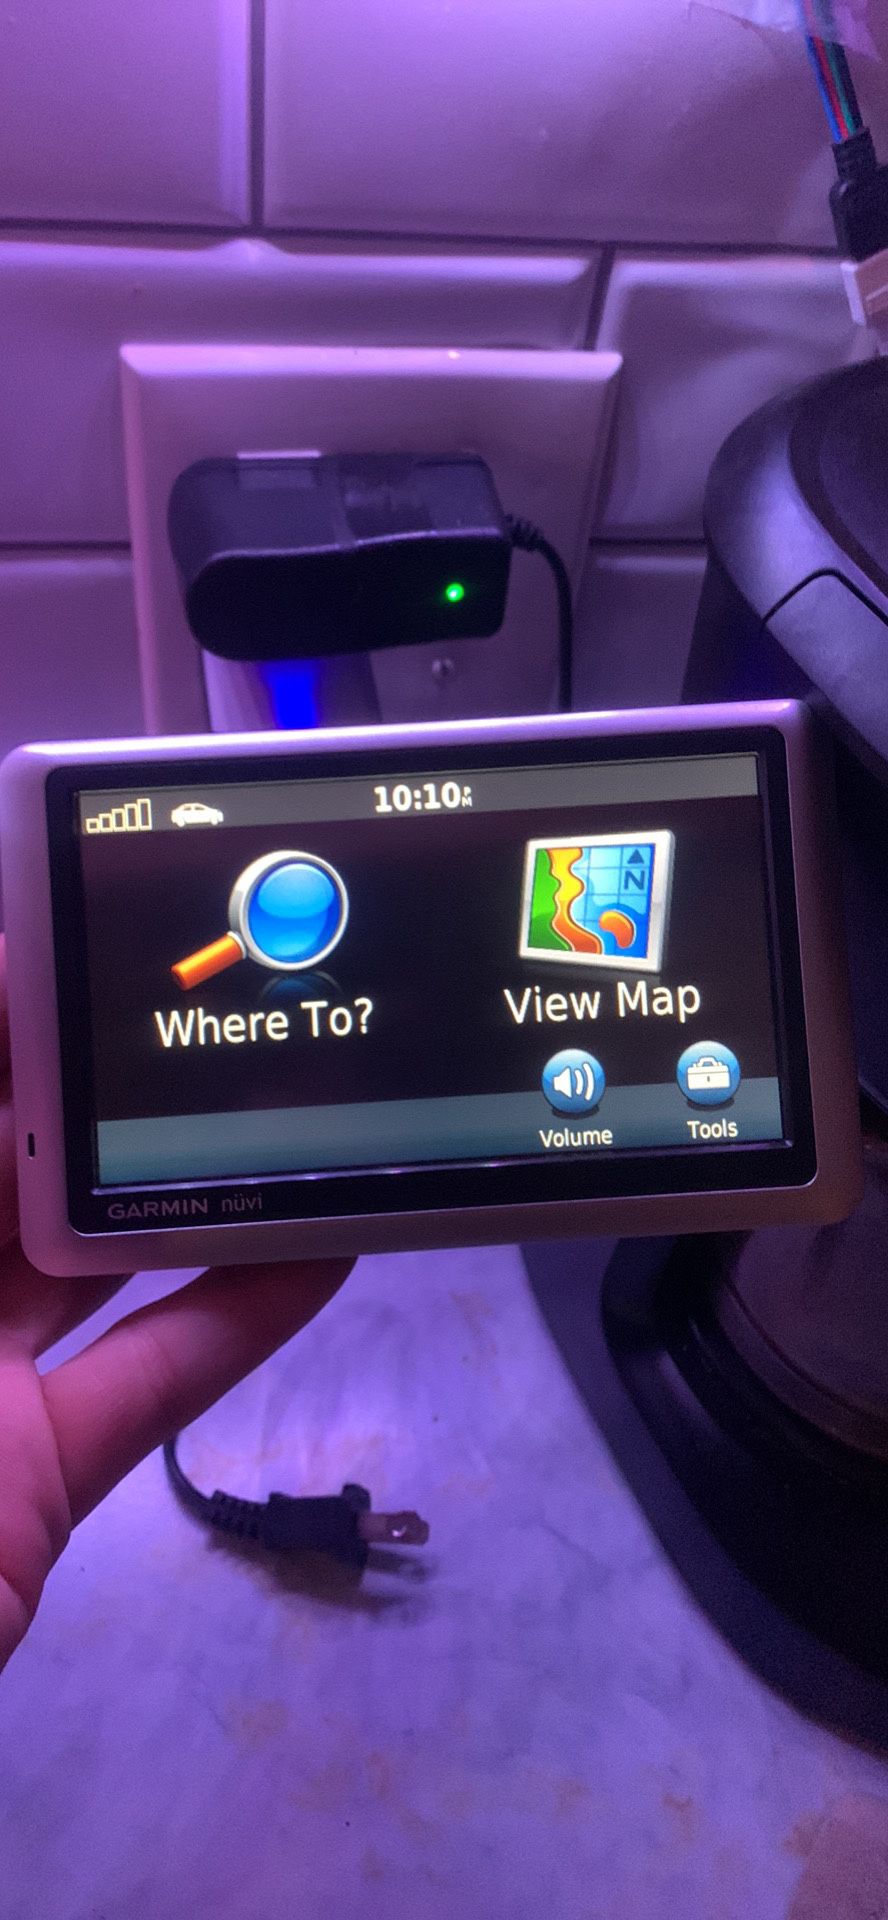 Garmin Nuvi Car GPS Device Springfield Ma 